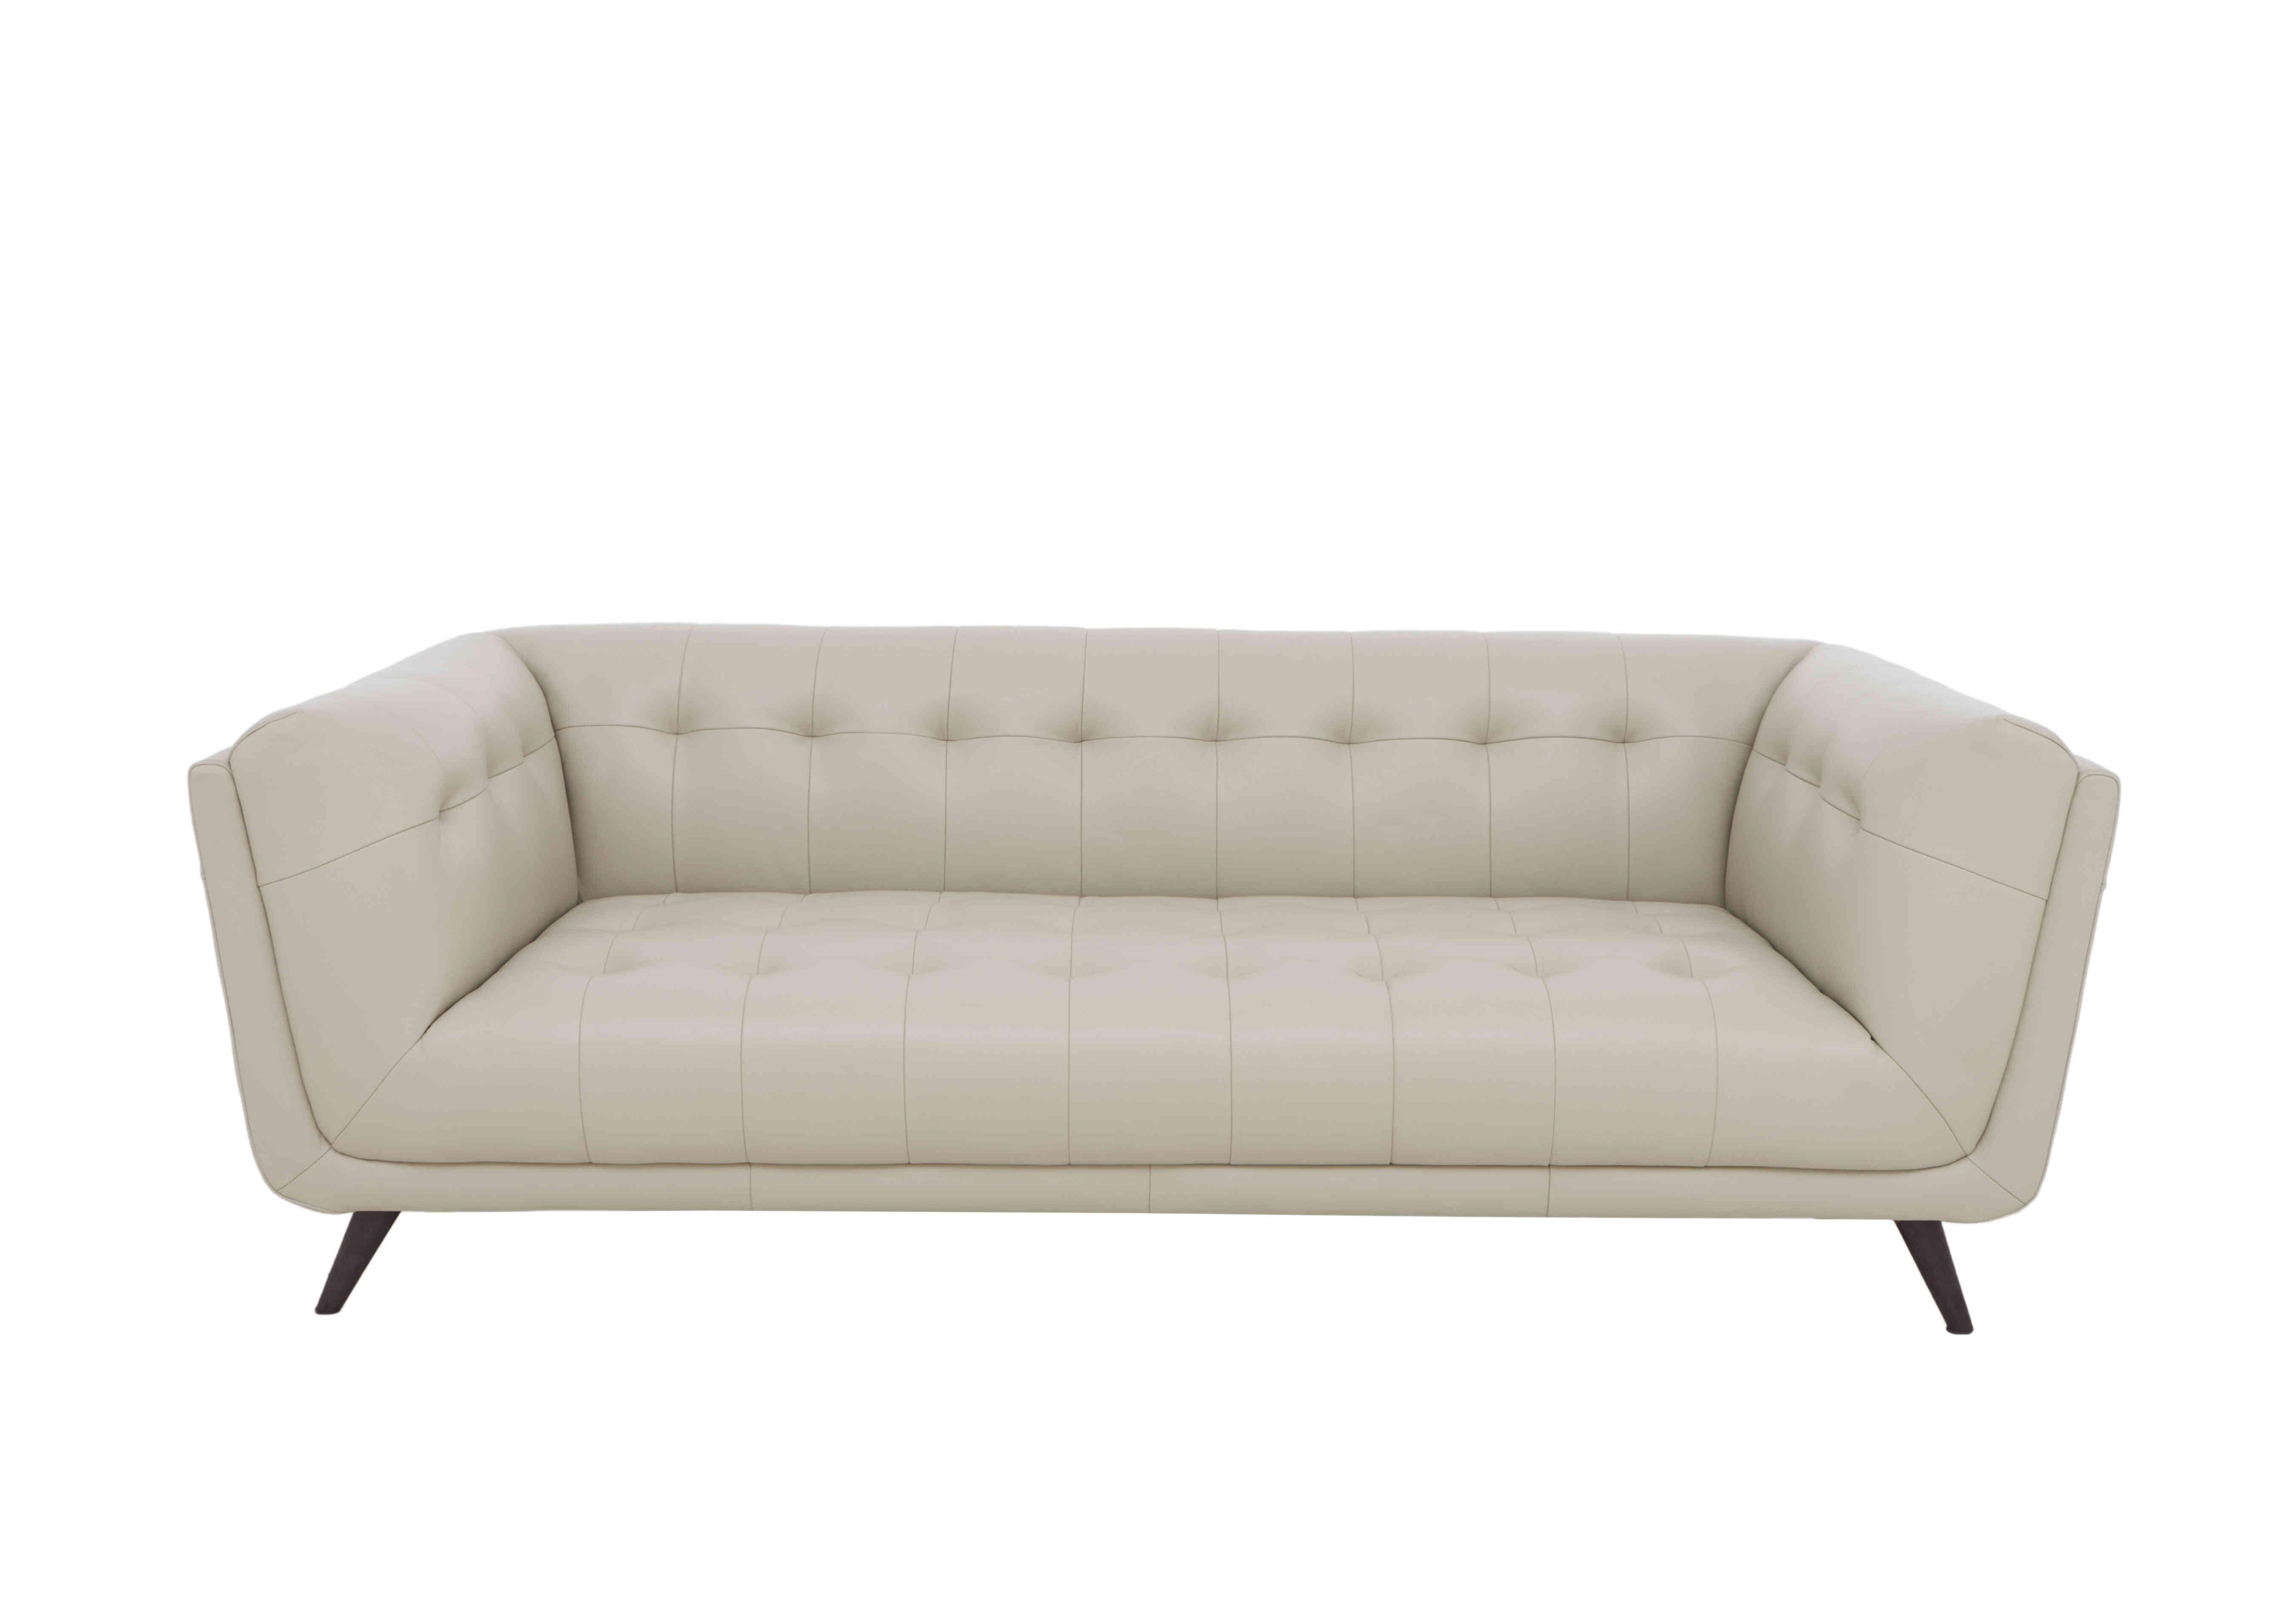 Rene 3 Seater Leather Sofa in Florida Lead Grey on Furniture Village